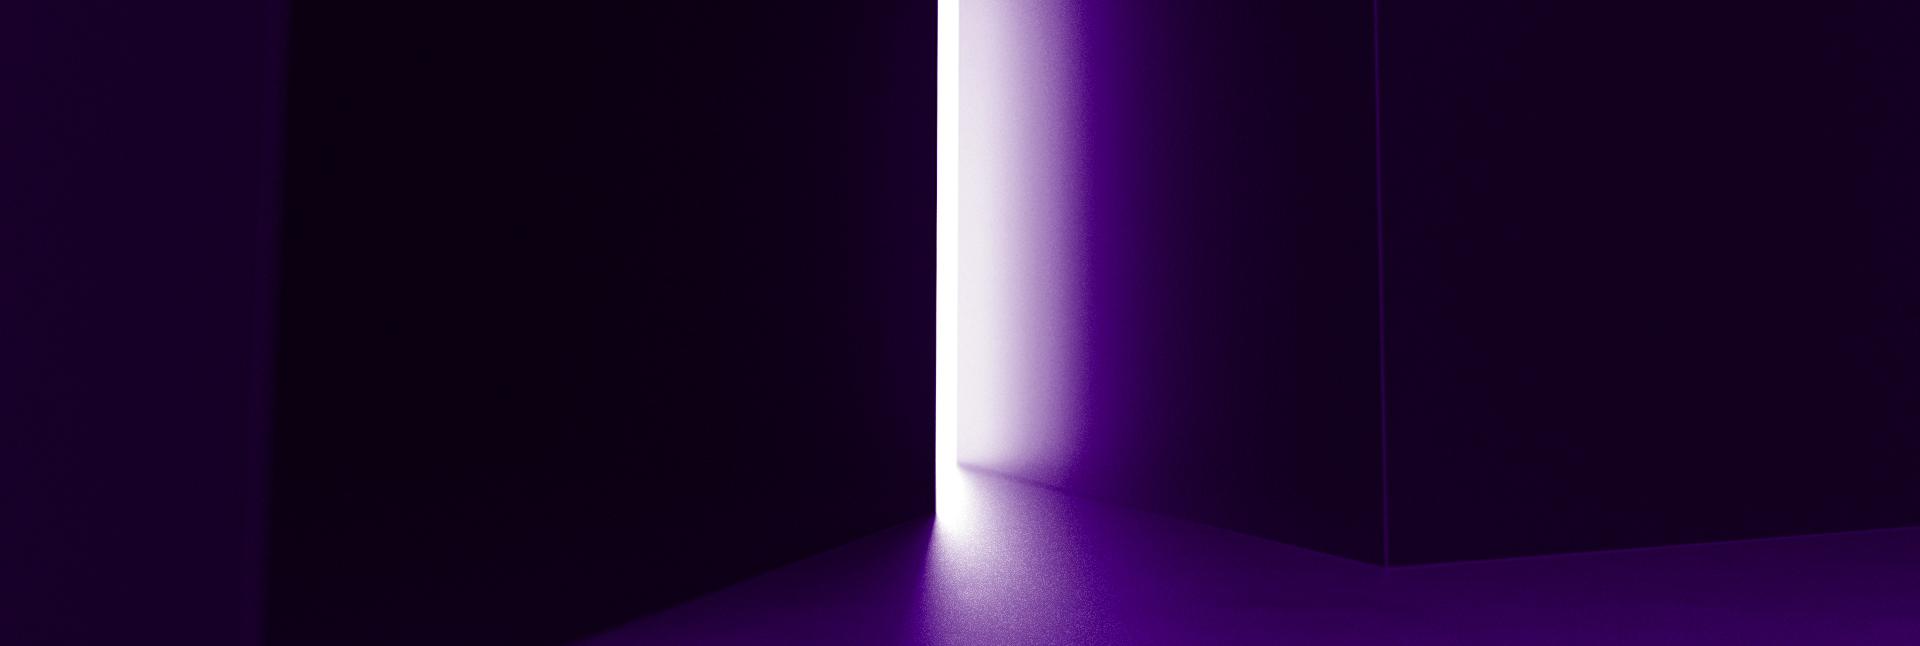 rra-background-purple-10.jpg